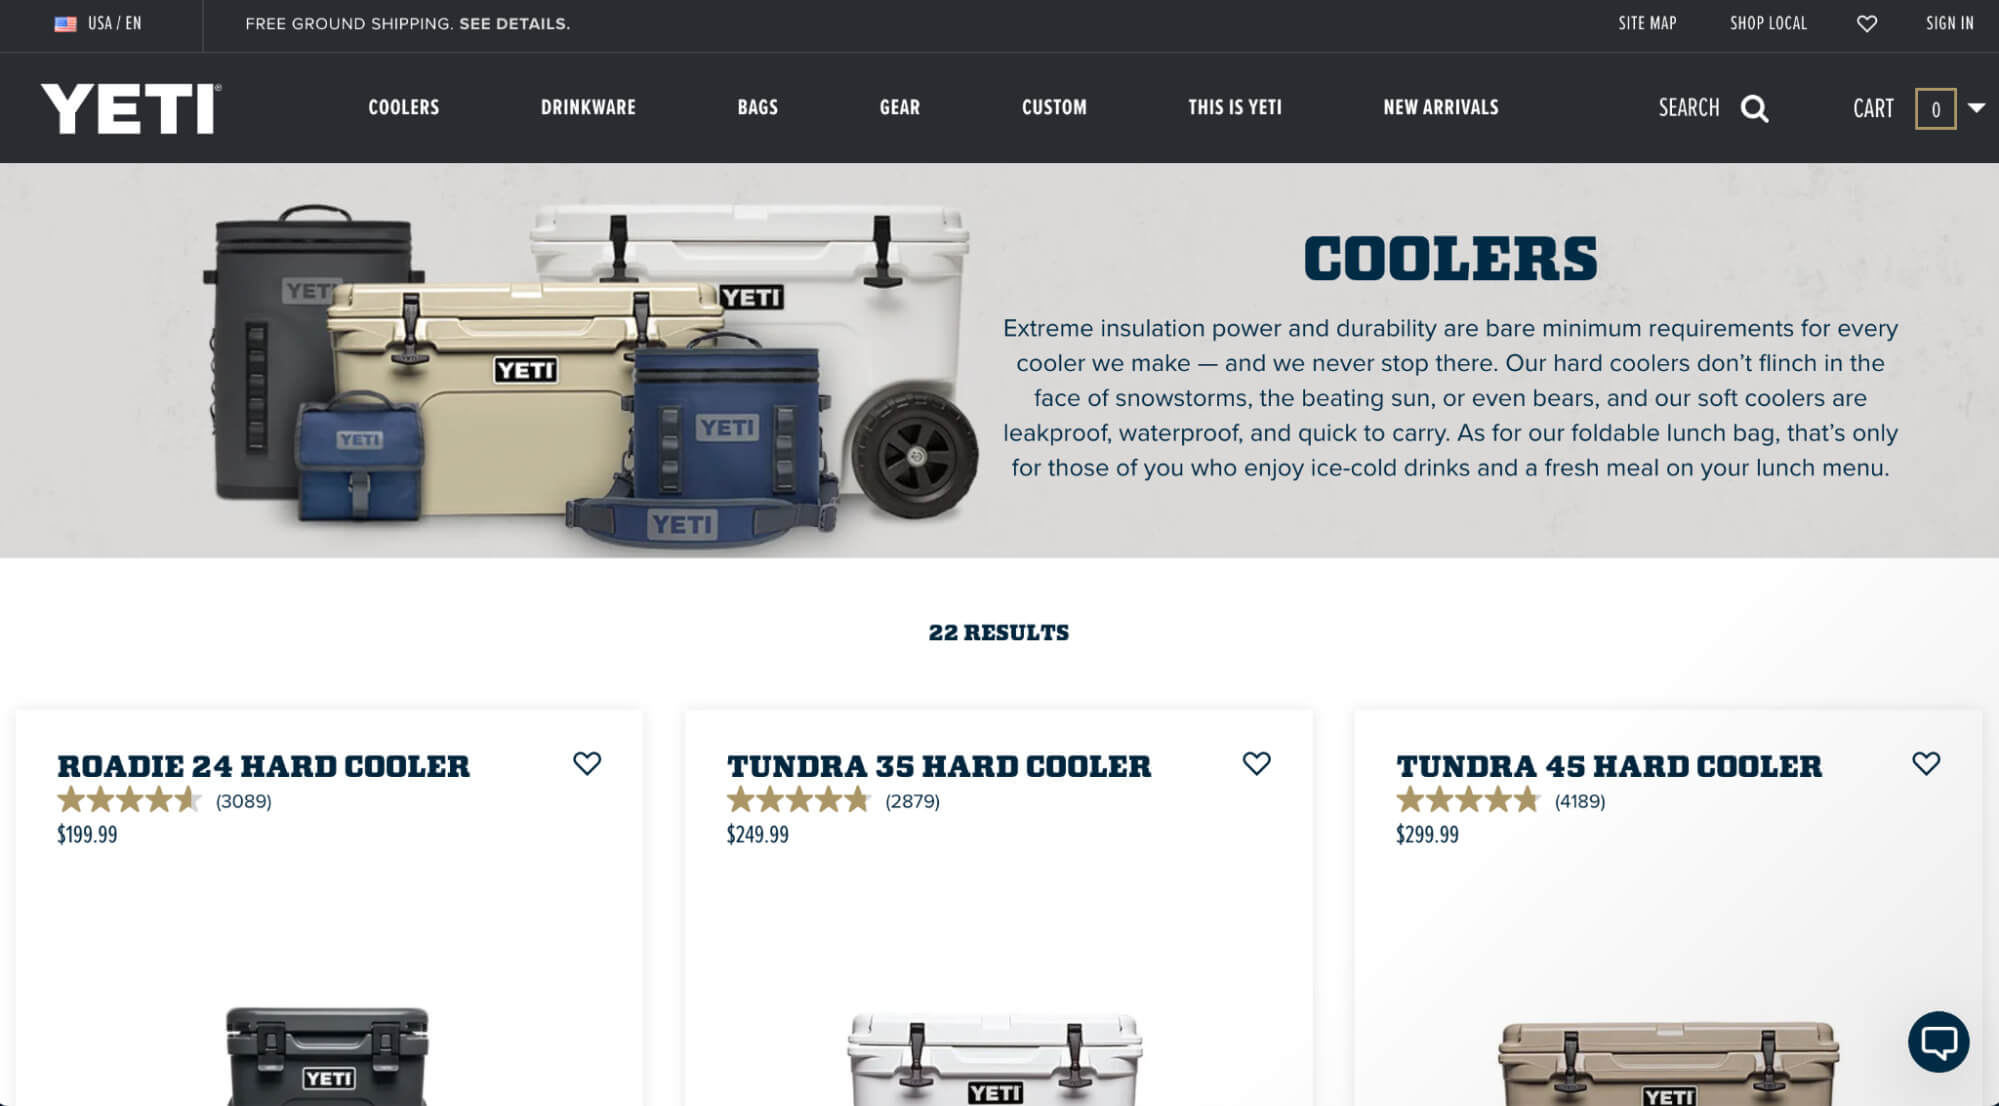 Yeti coolers product page screenshot